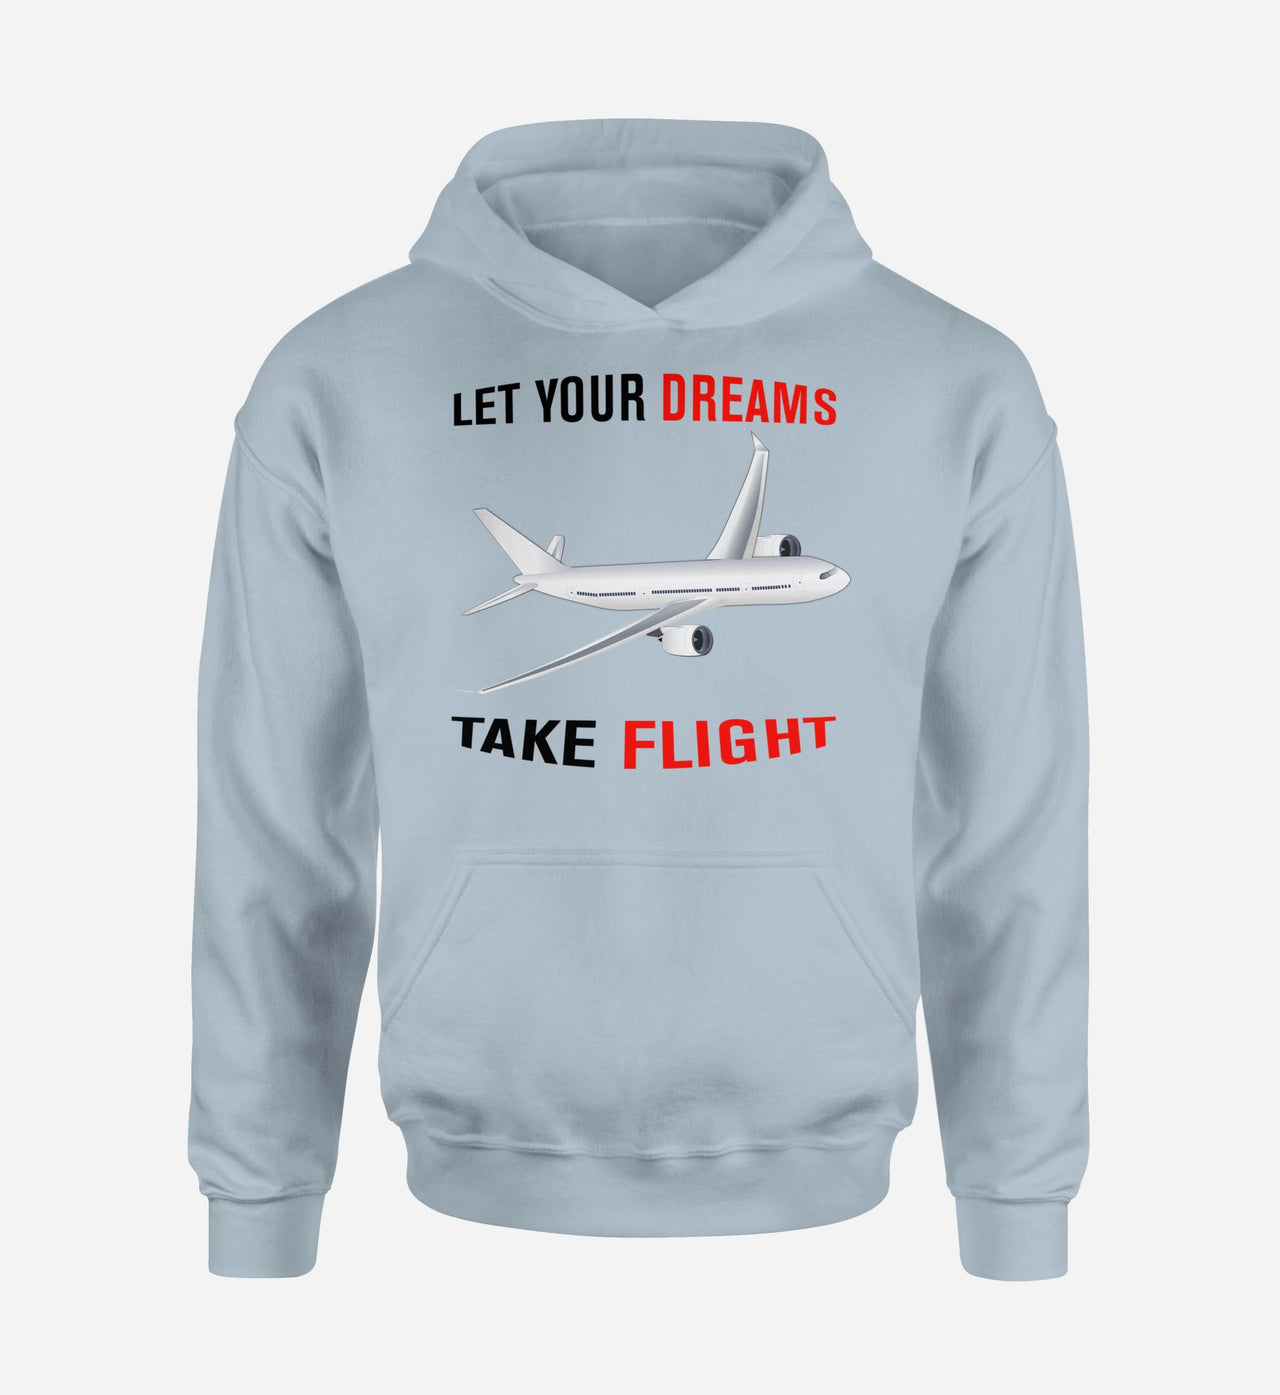 Let Your Dreams Take Flight Designed Hoodies